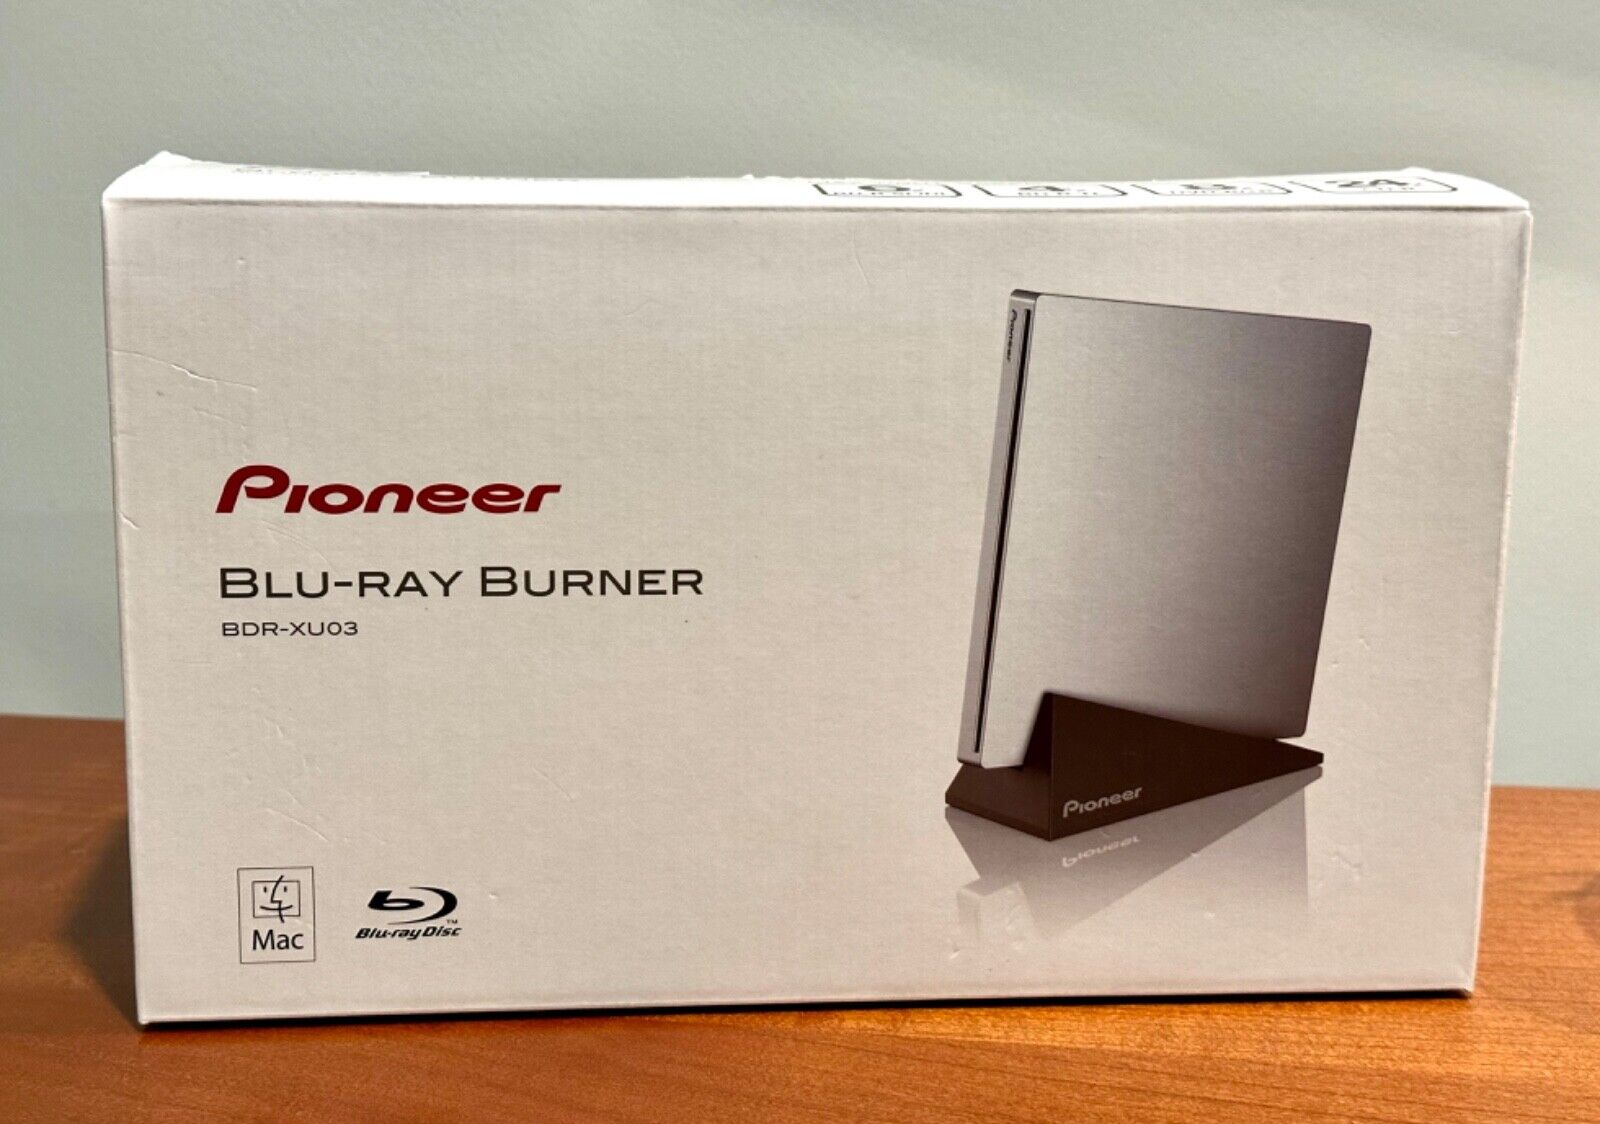 Pioneer Blu-Ray Burner Slim portable, USB 3.0 BD/DVD/CD Writer BDR-XU03 Open box